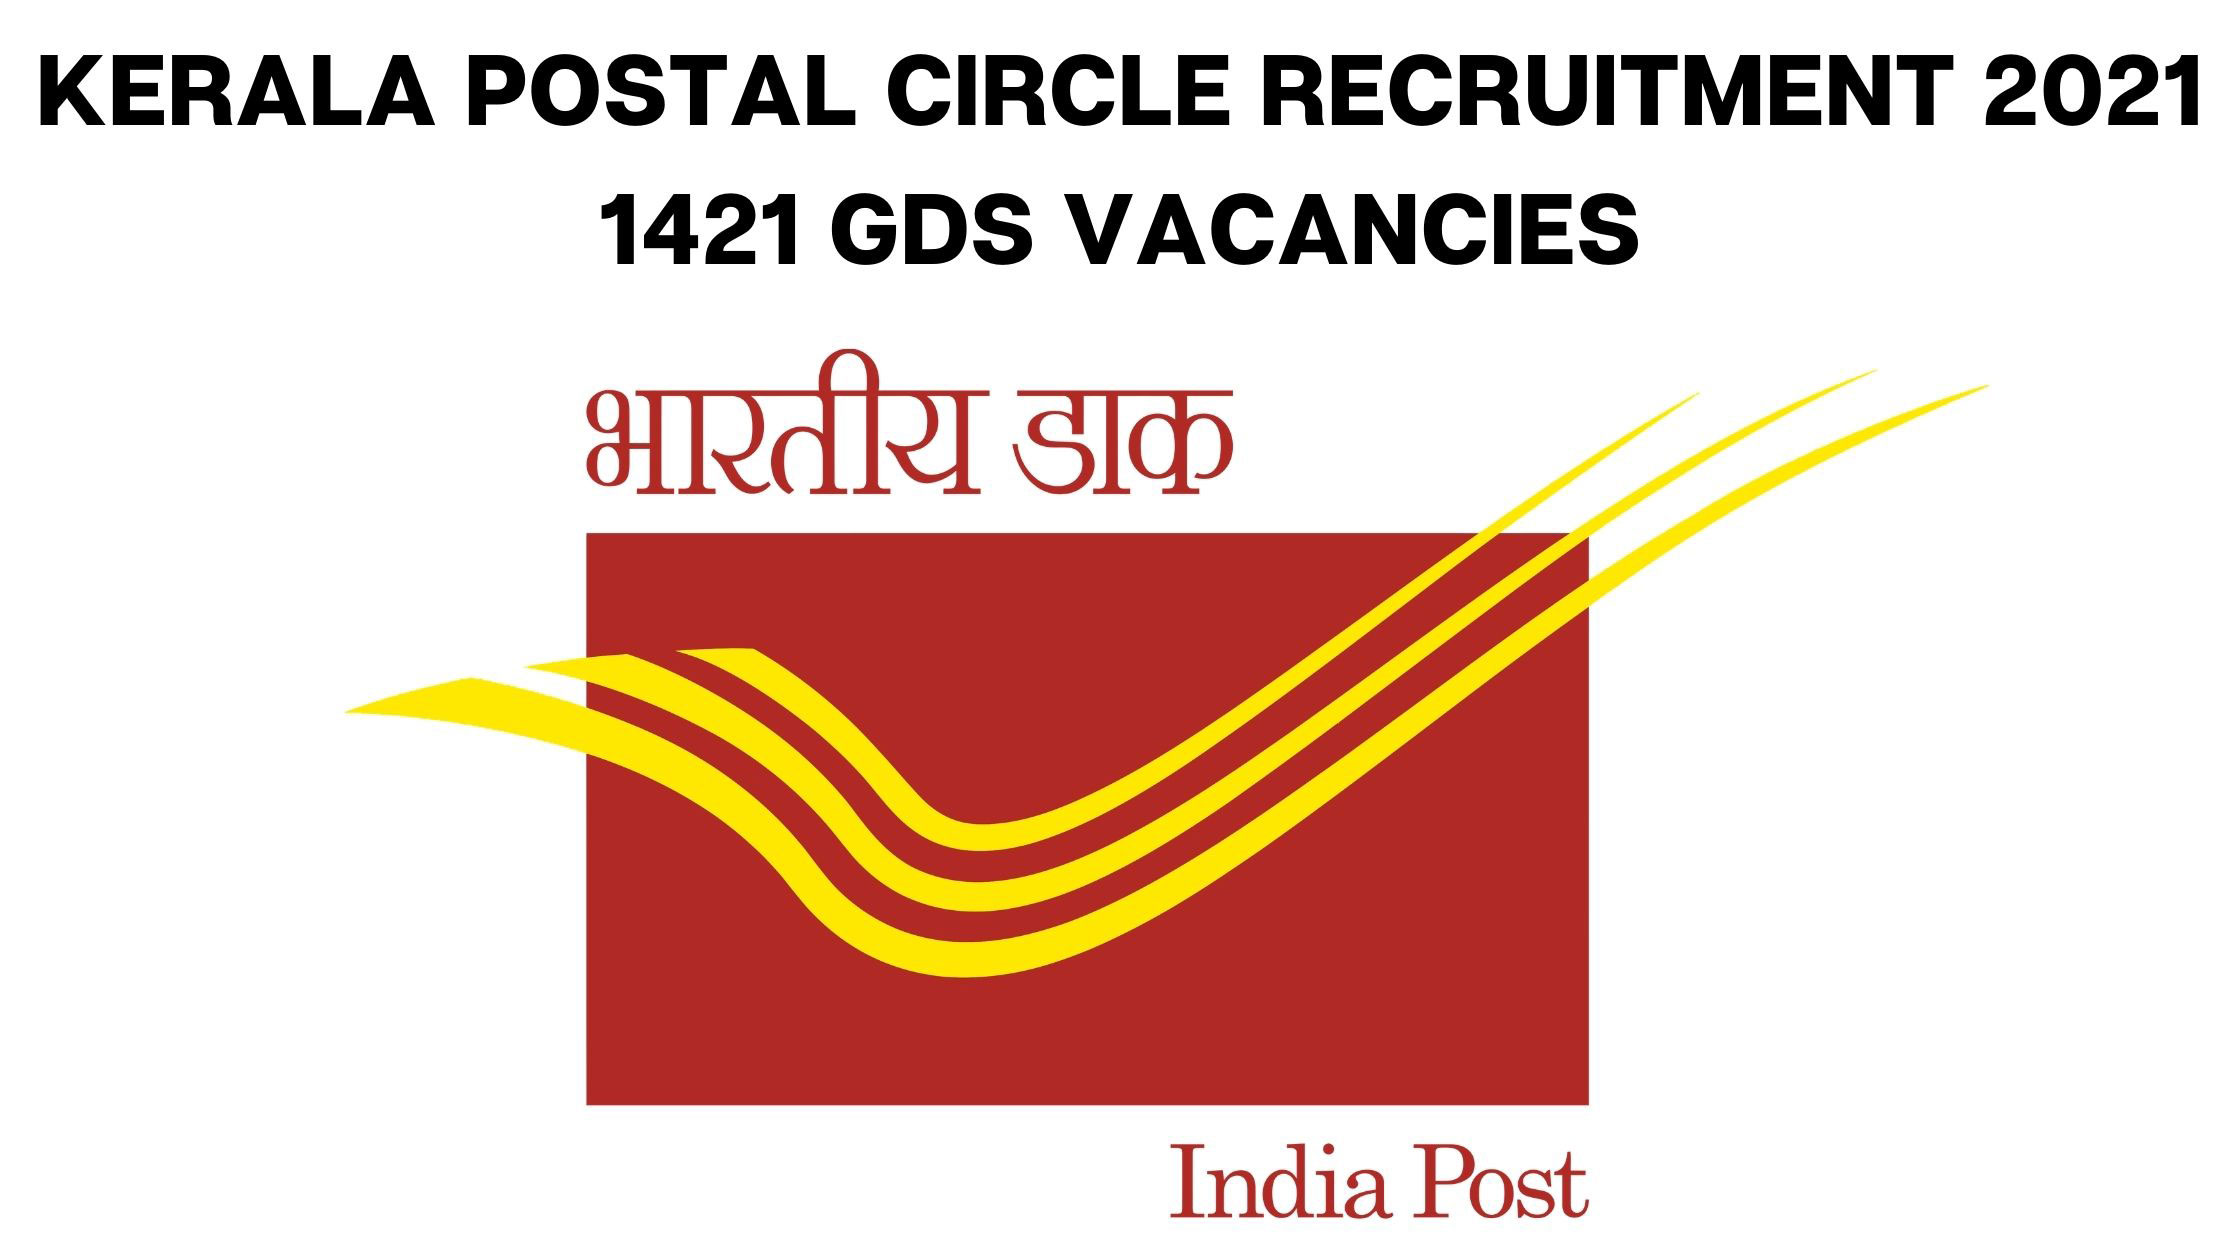 Vacancies in Kerala Post Office